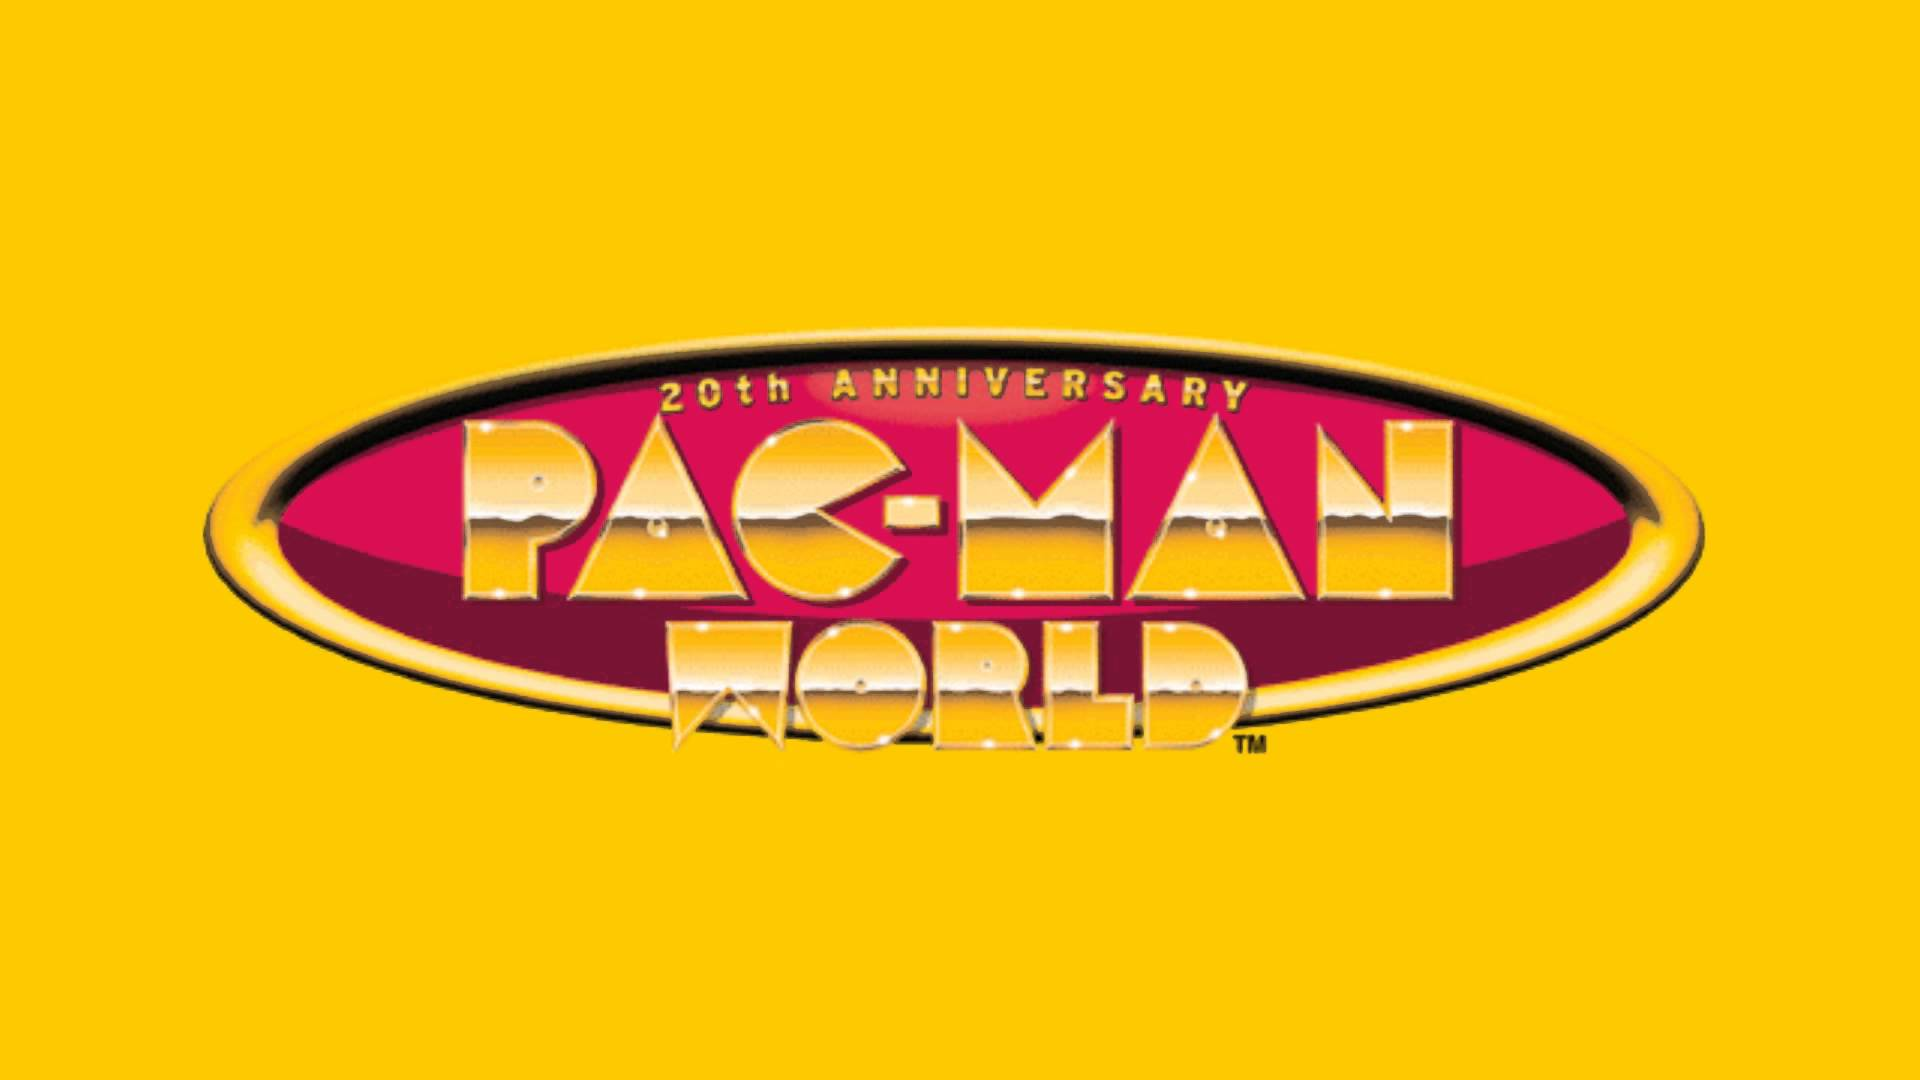 Pac-Man World Logo